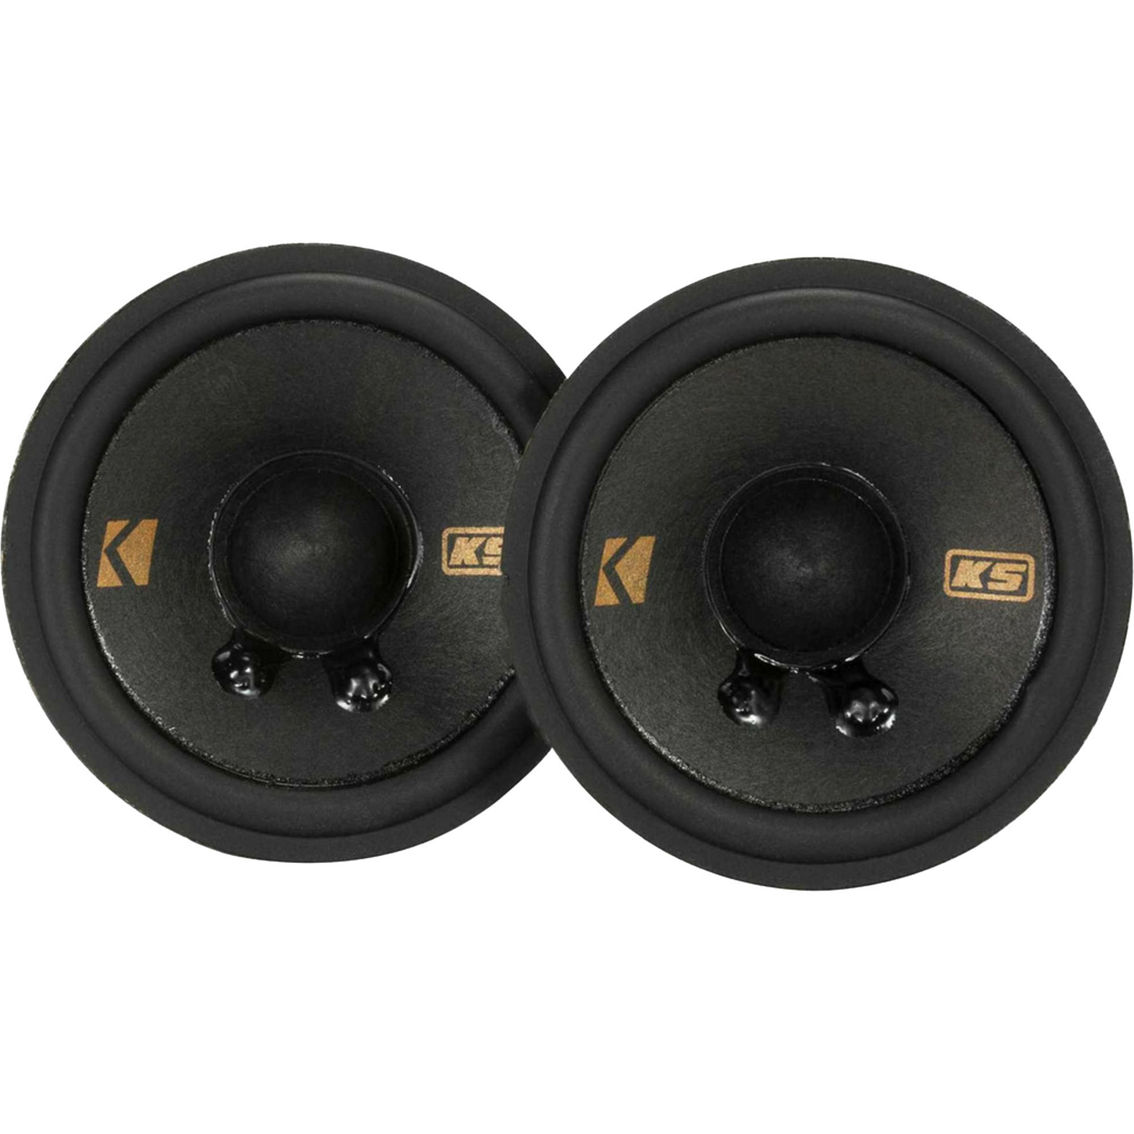 Kicker 51KSS269 400W Peak (200W RMS) Component Speaker System - Image 2 of 4